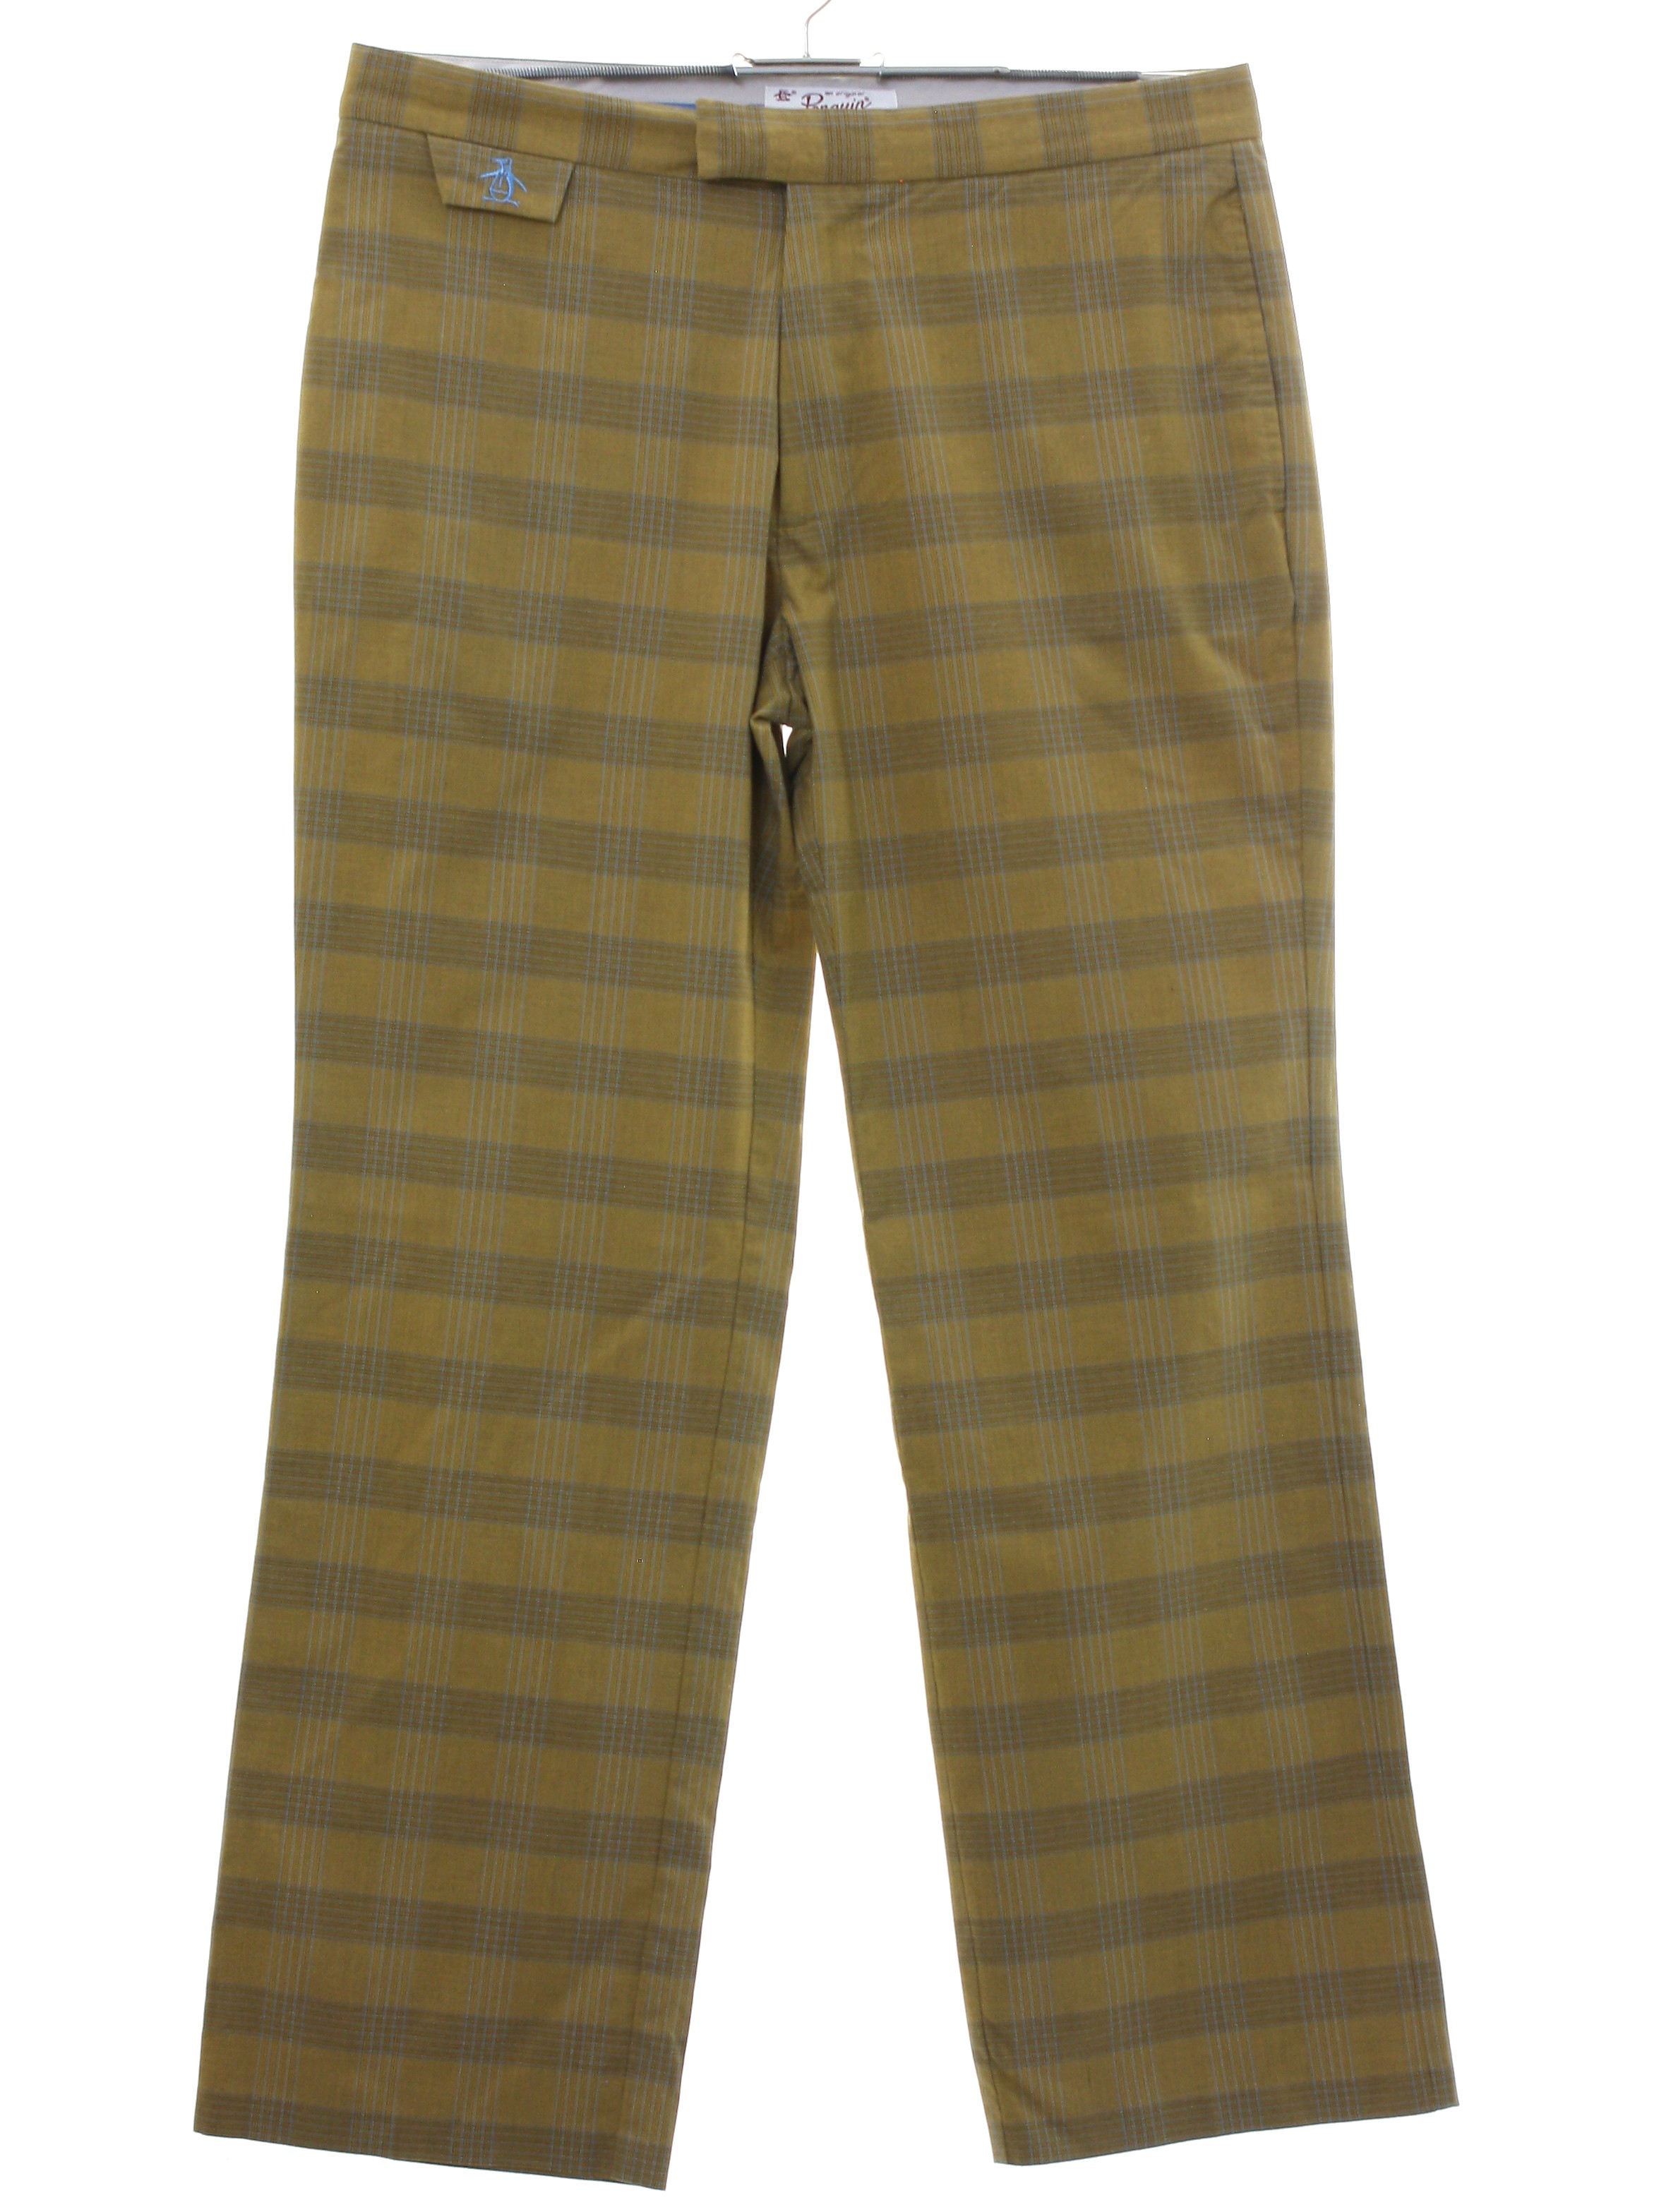 mustard yellow plaid pants